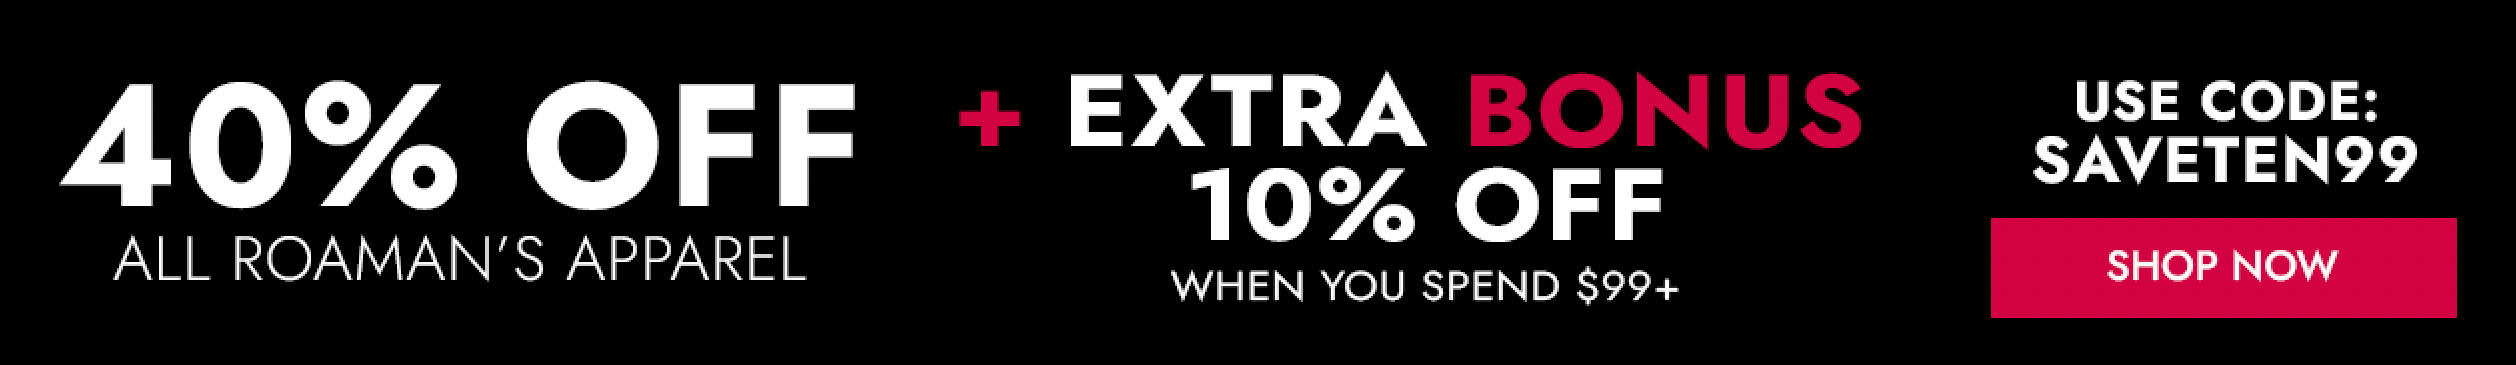 40% Off all roaman'd apparel + Extra bonus 10% Off when you spend $99+ Use Code: SAVETEN99 shop now